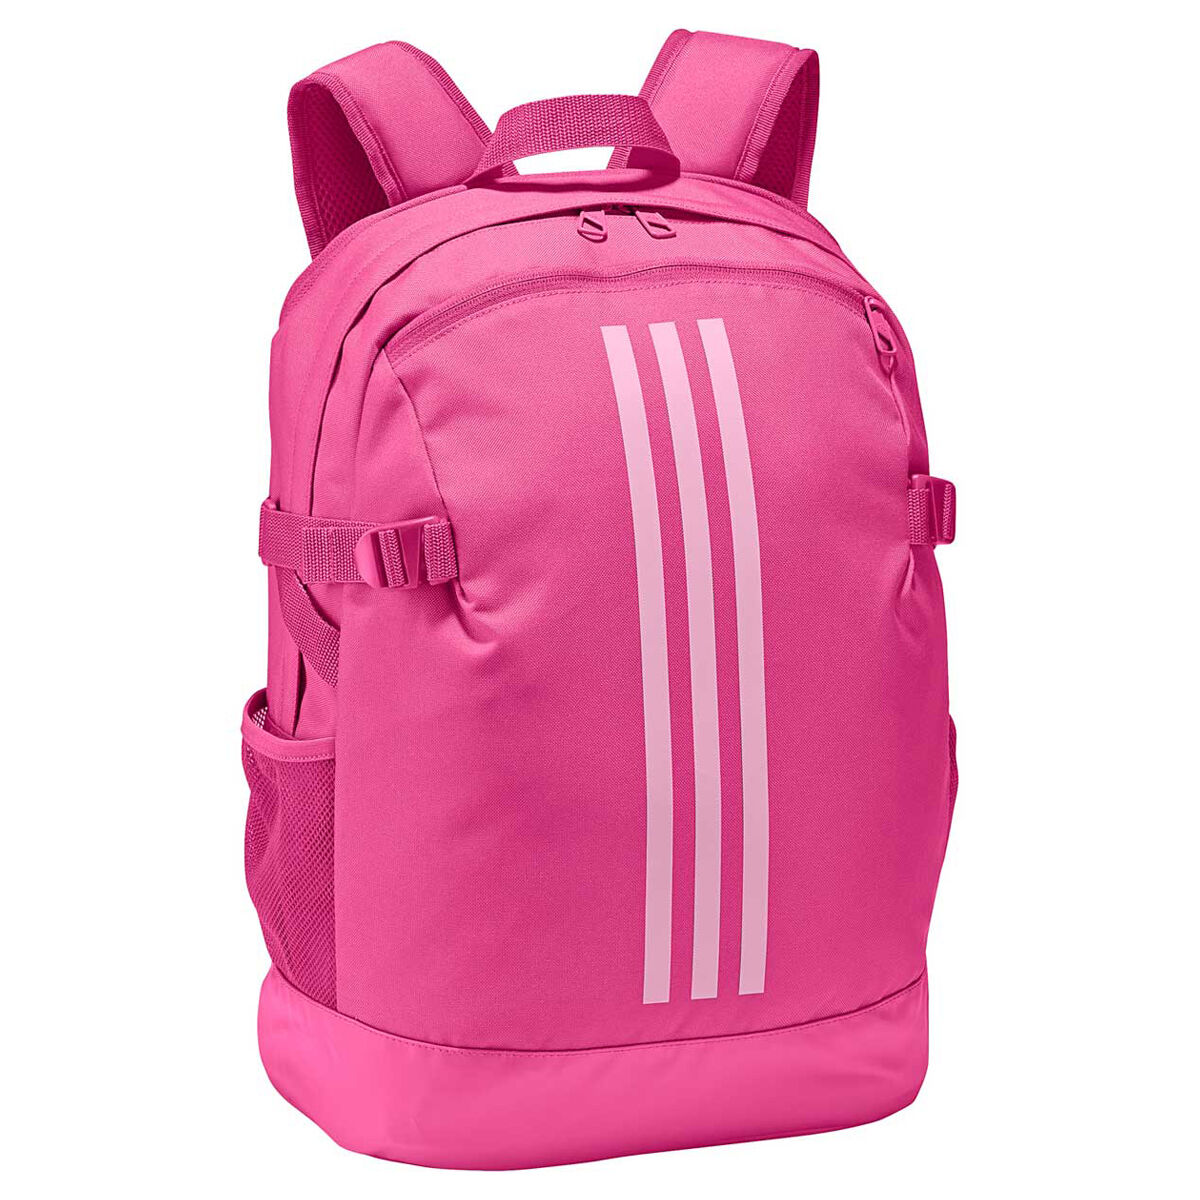 adidas backpack rebel sport